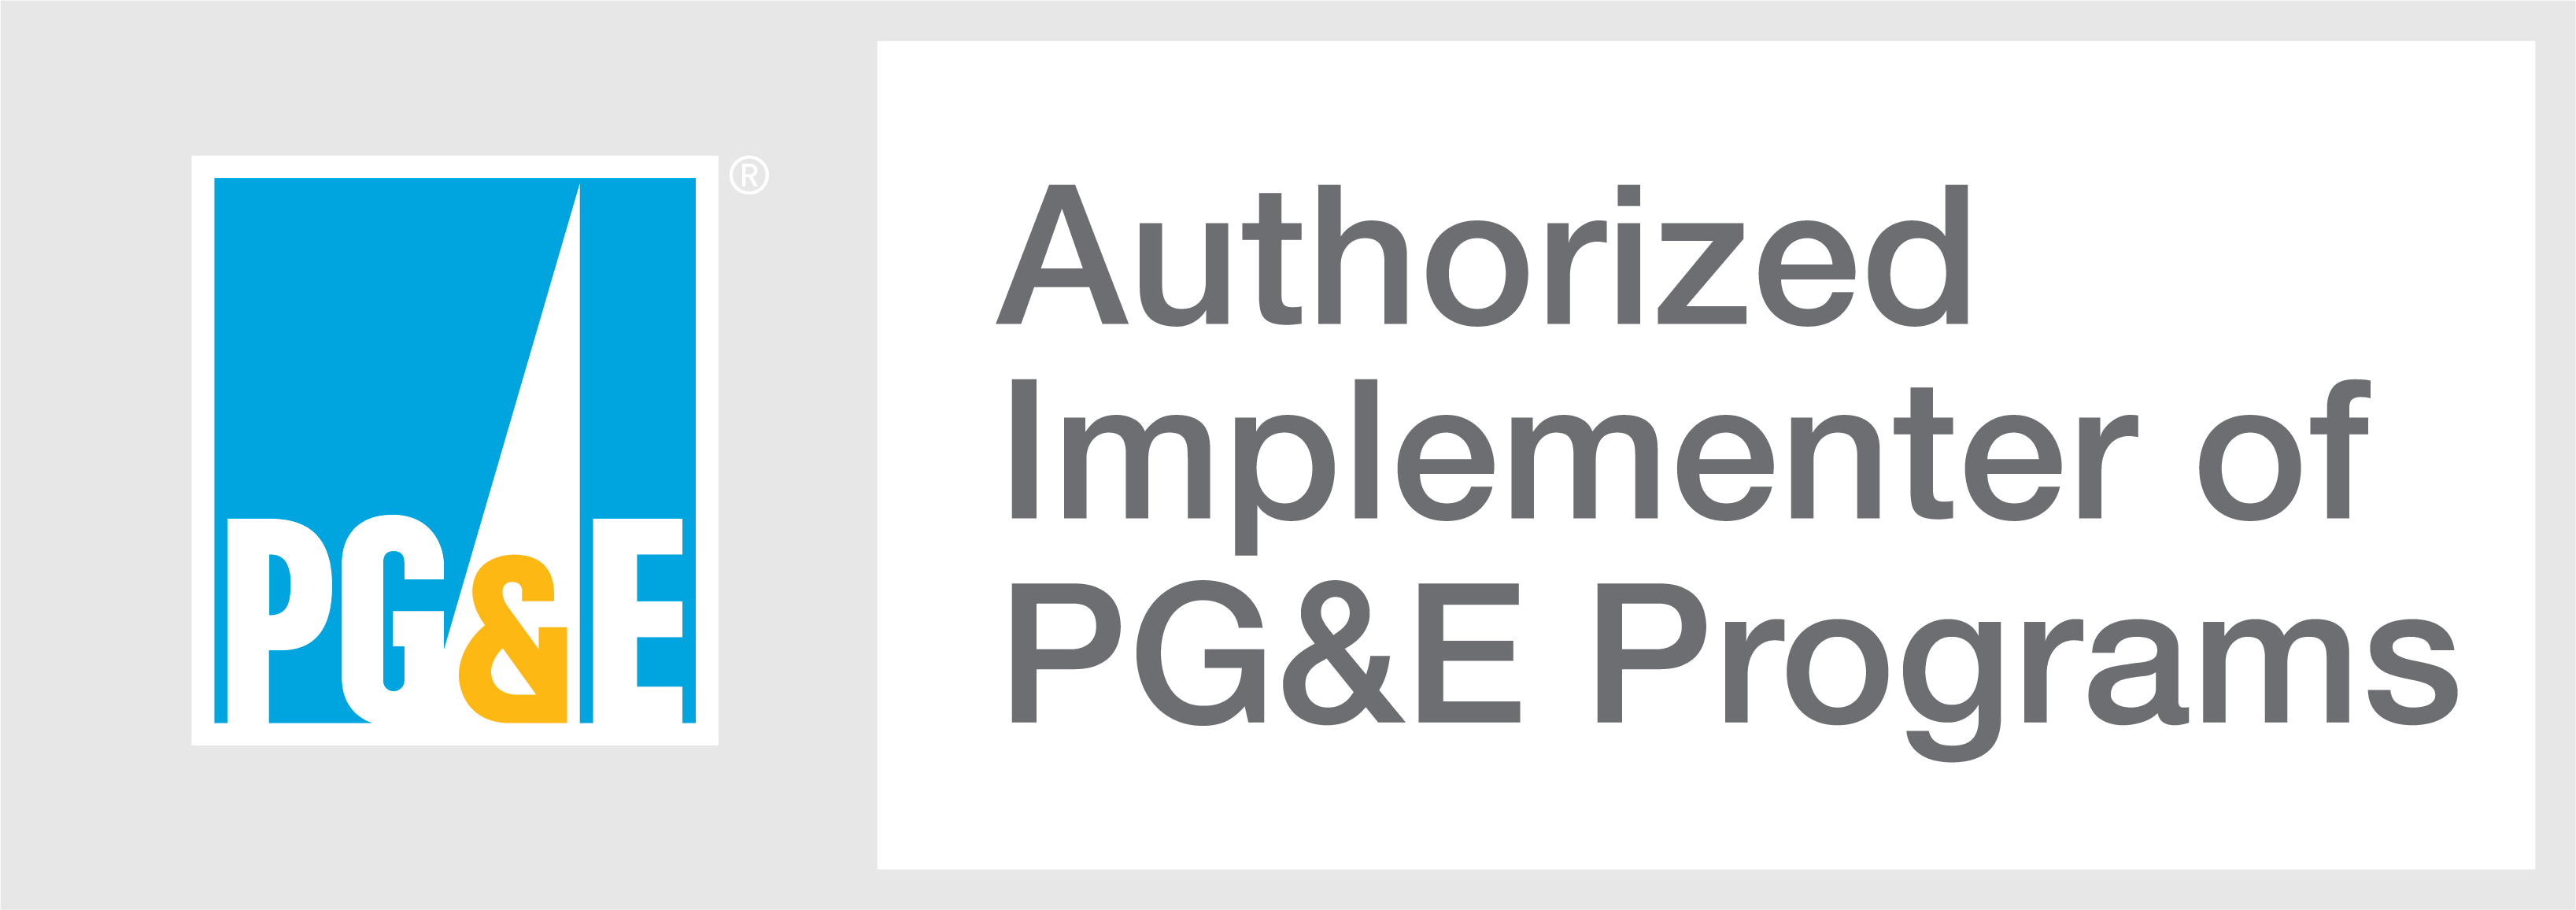 Authorized Implementer of PG&E Programs, visit PG&E